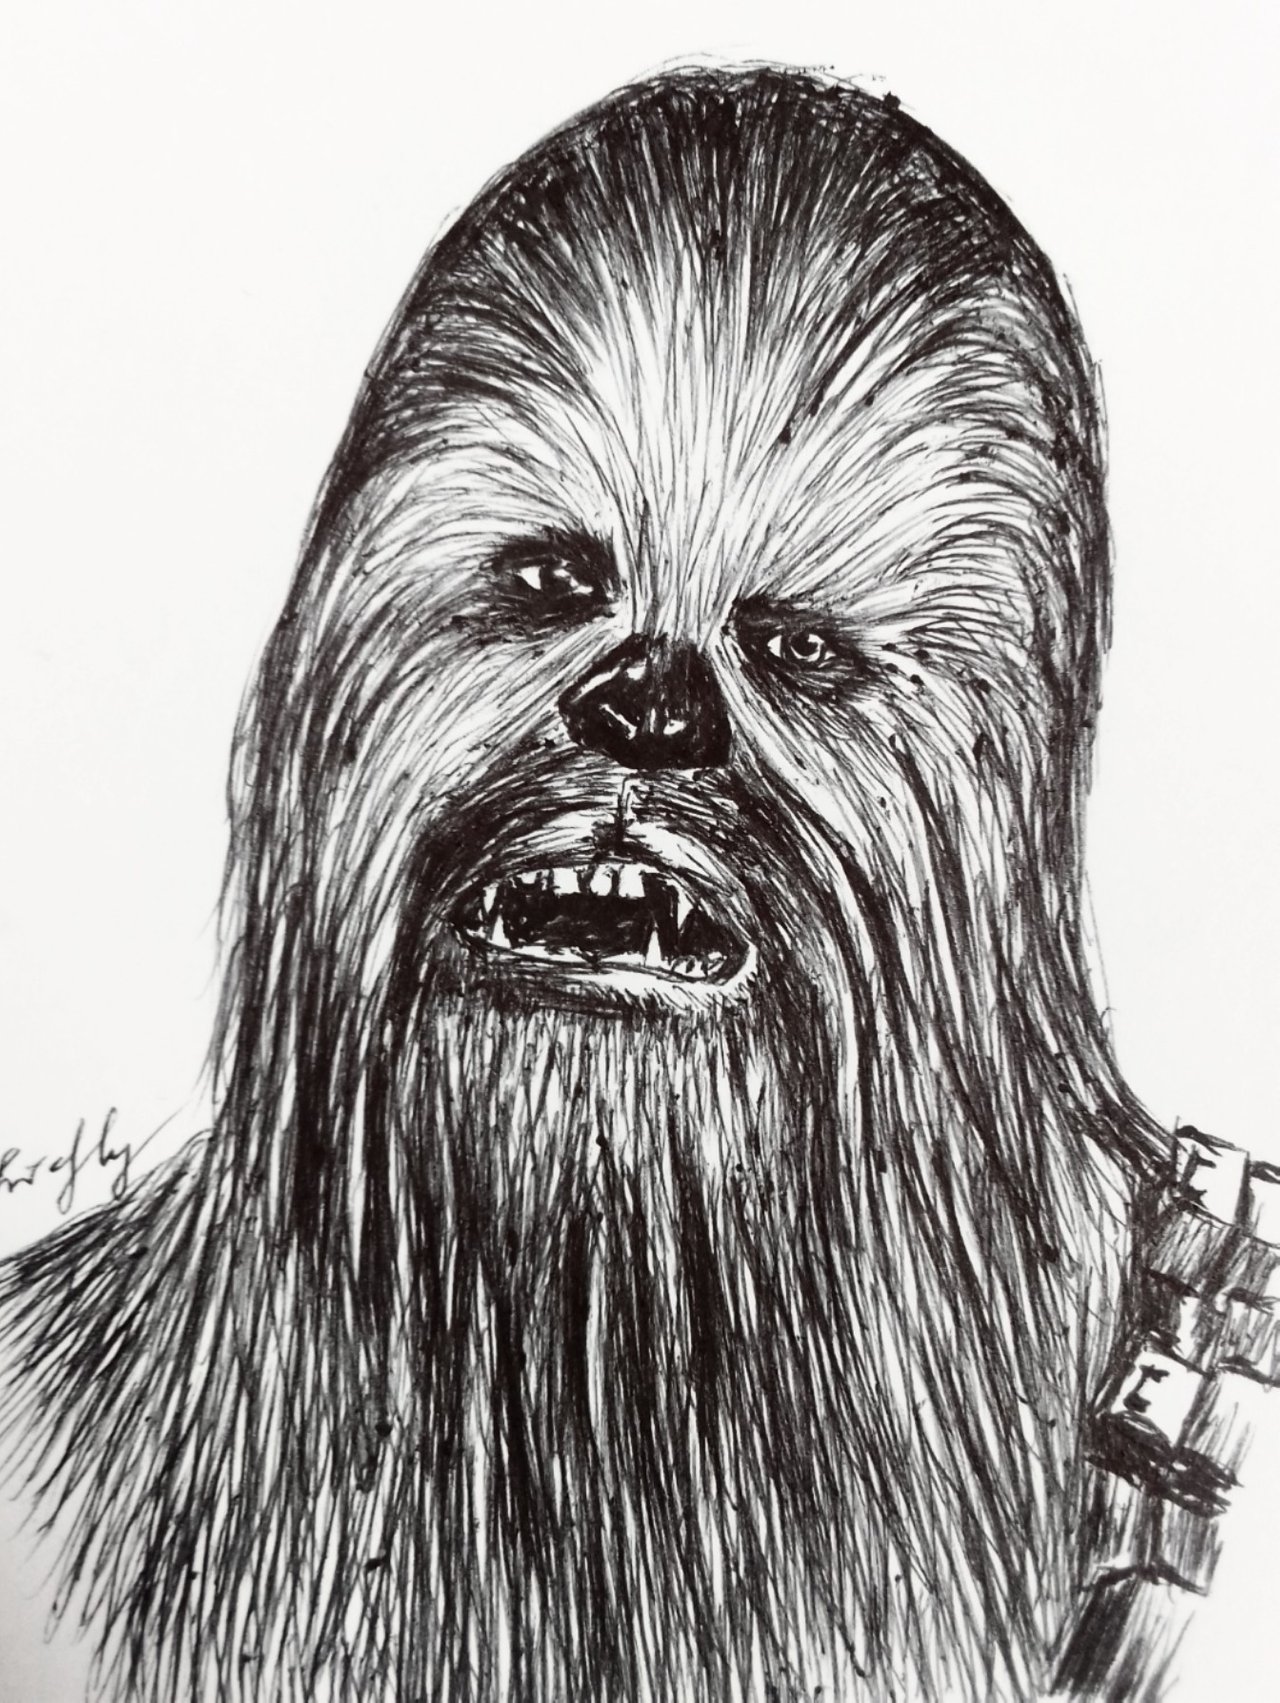 chewbacca head drawing